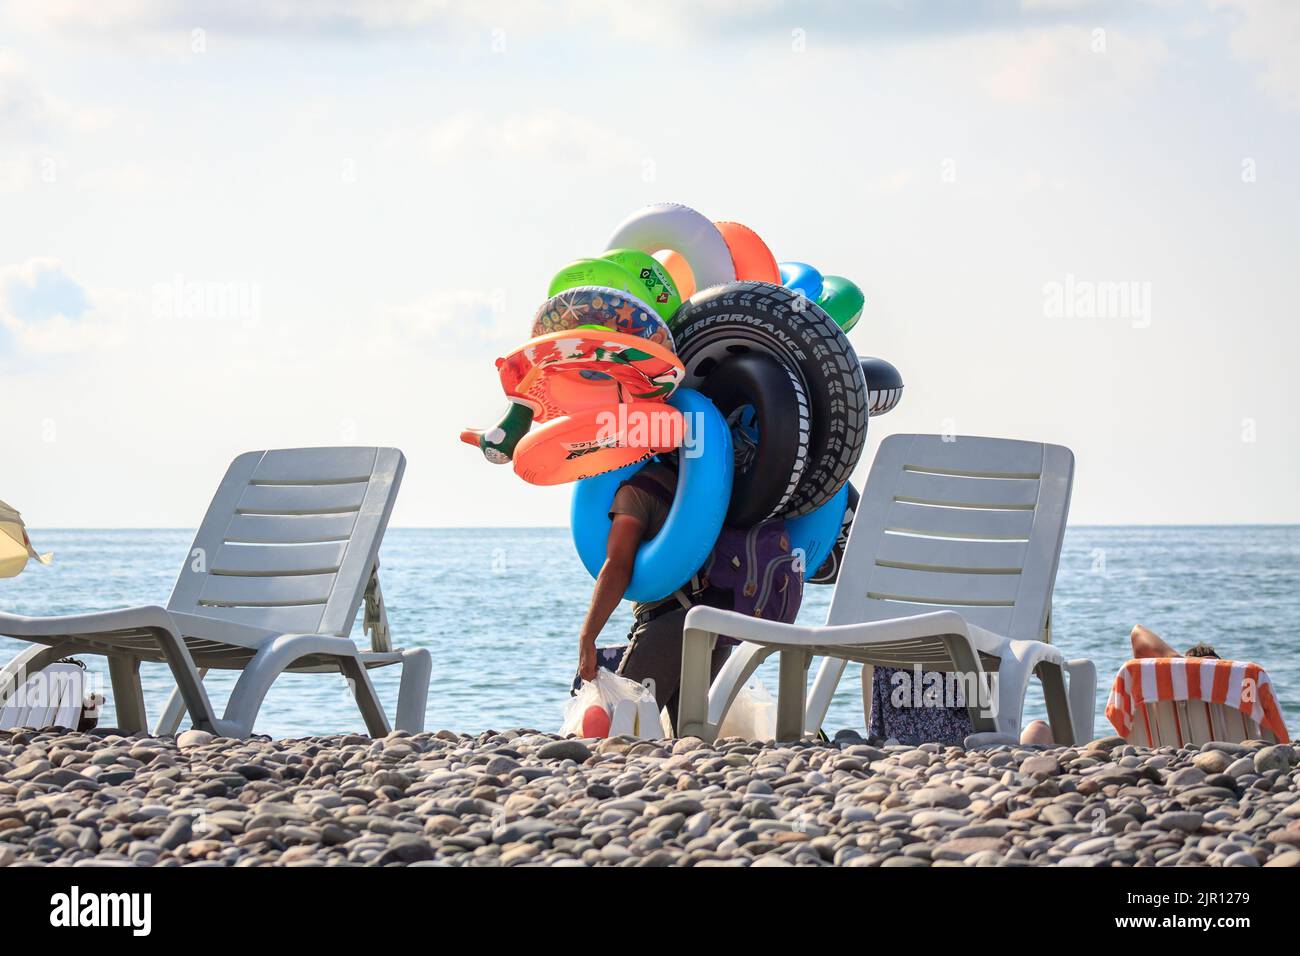 A man sells inflatable toys on a beach. Beach seller. Batumi, Georgia - July 2, 2021 Stock Photo